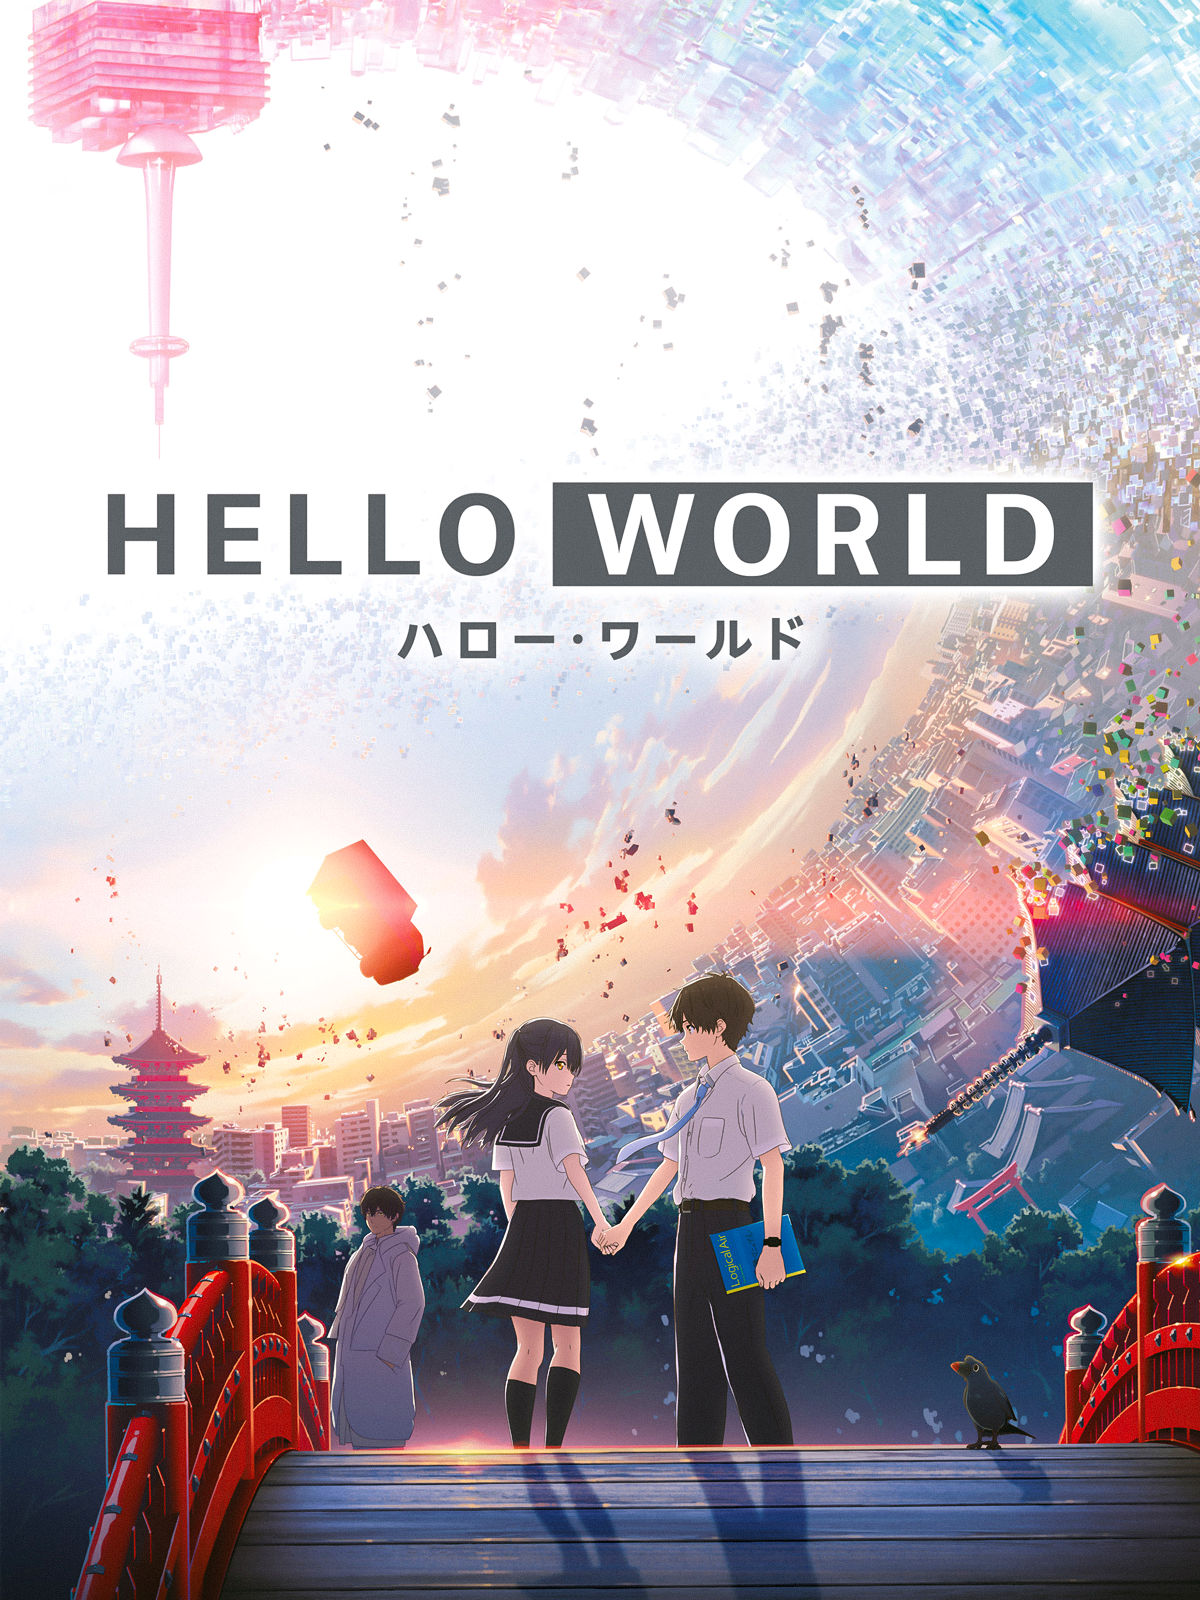 Hello World | Pelicula | 01-01 | Dual Audio | 120 Fps